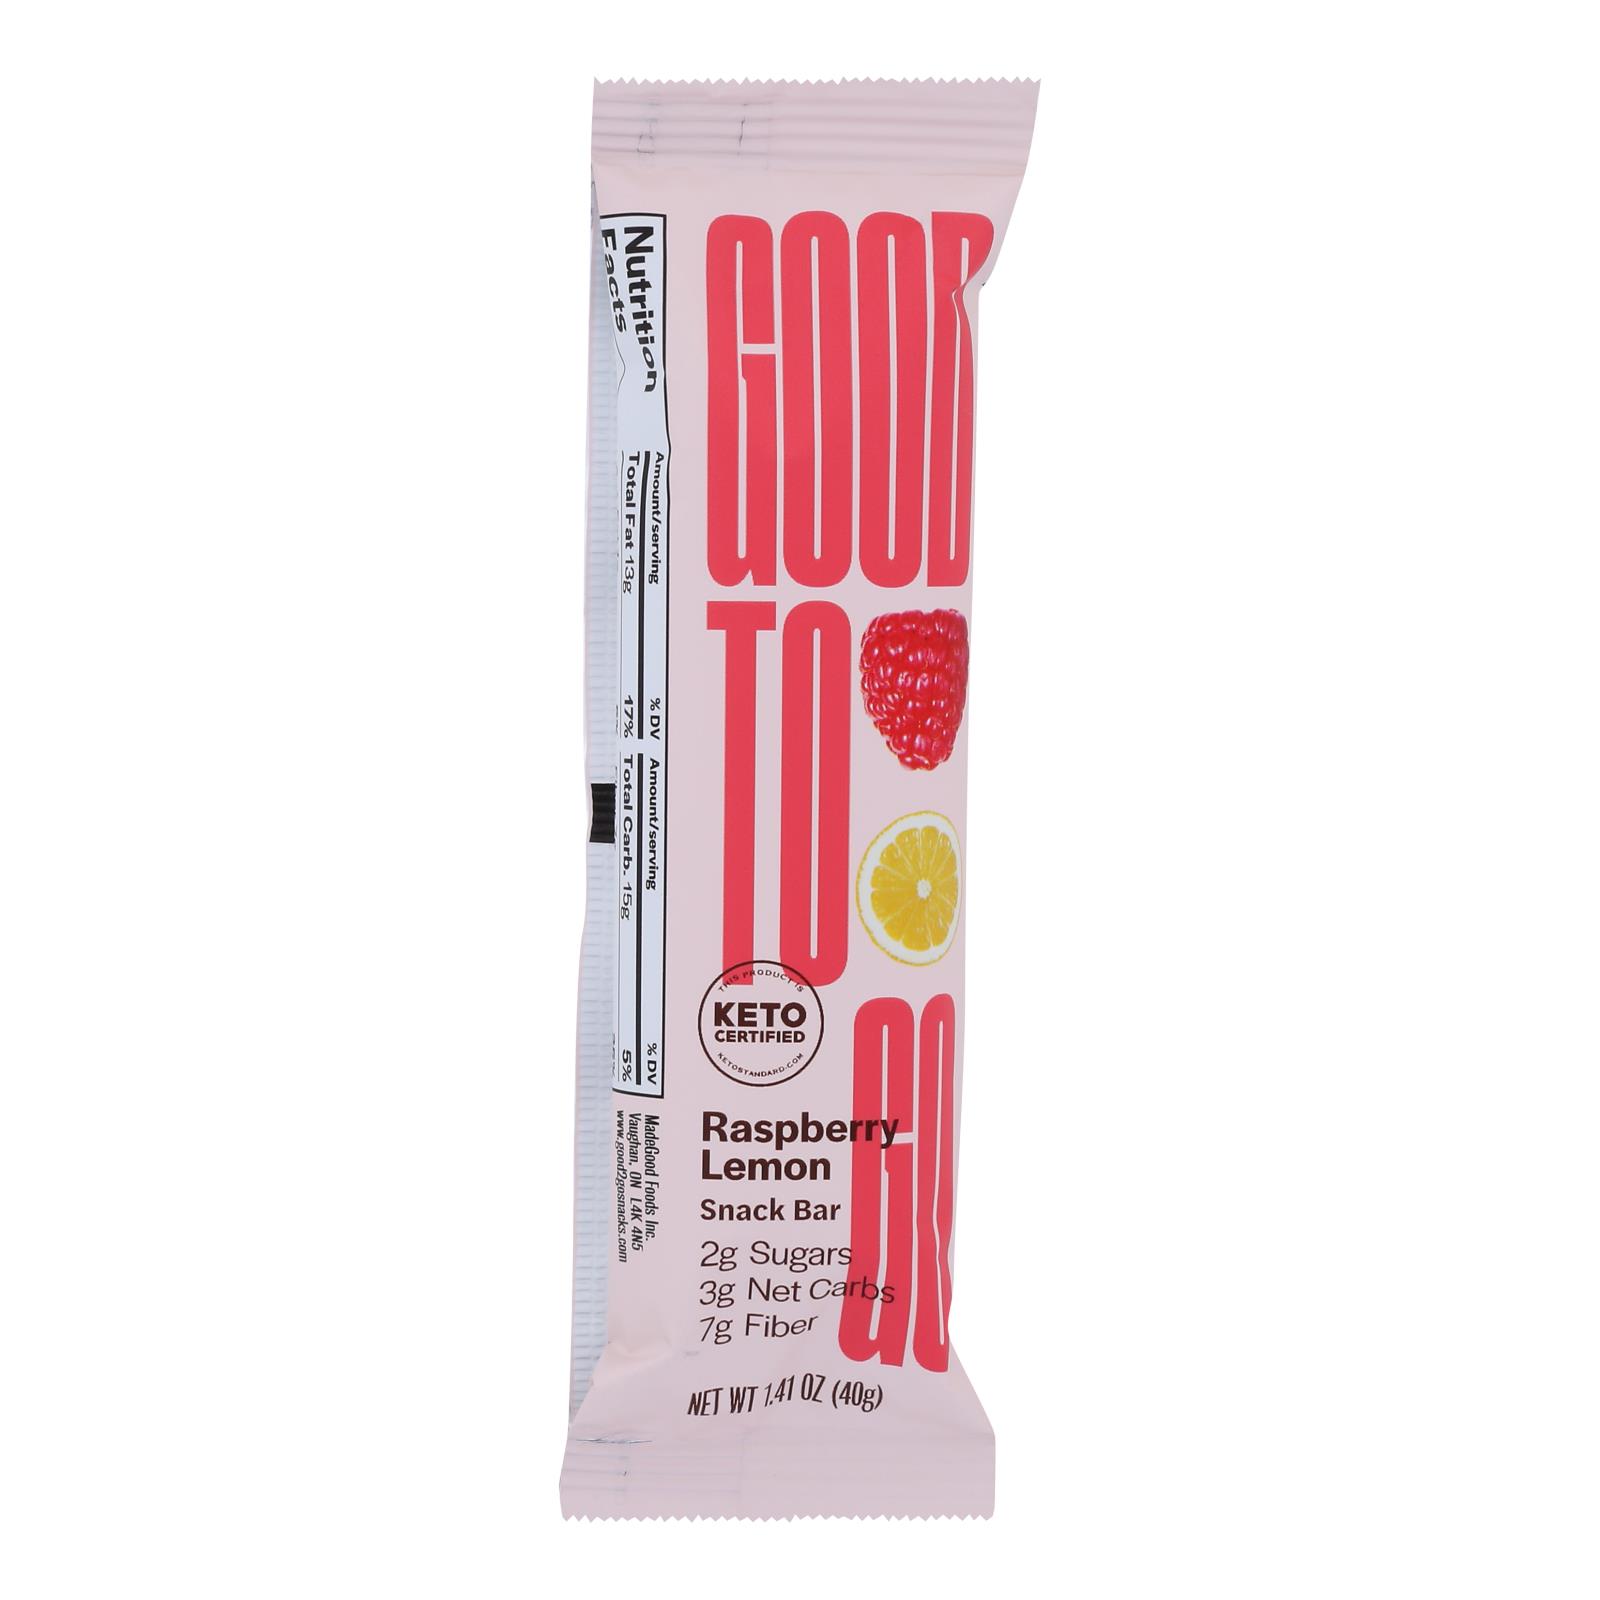 Good To Go - Keto Snack Bar Raspberry Lemon - 9개 묶음상품 - 1.41 OZ